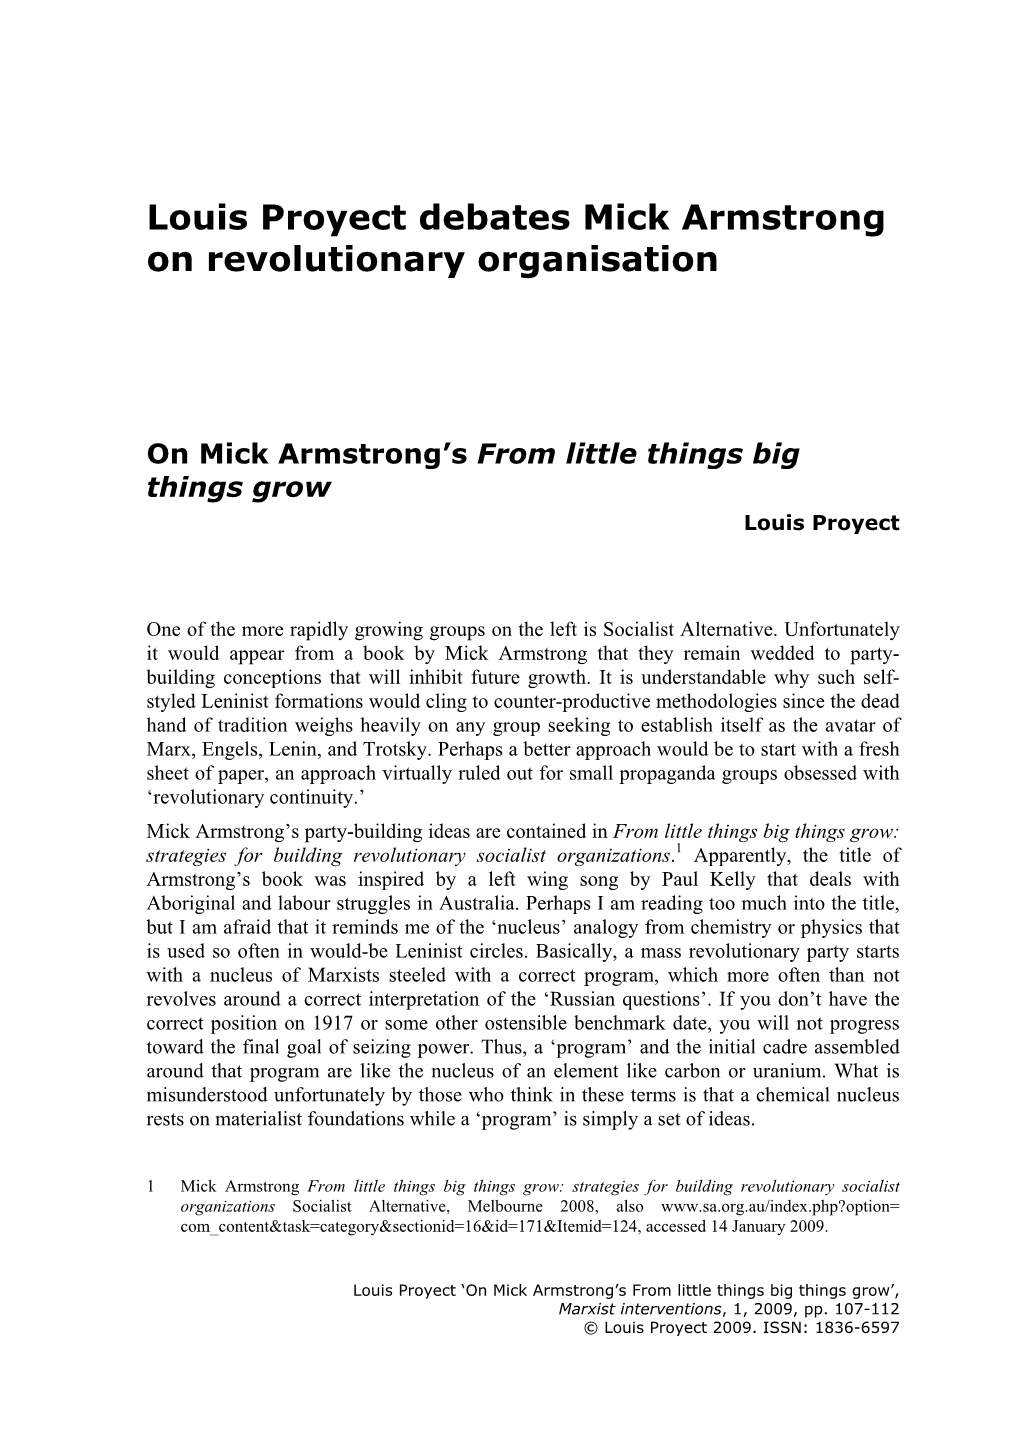 Louis Proyect Debates Mick Armstrong on Revolutionary Organisation